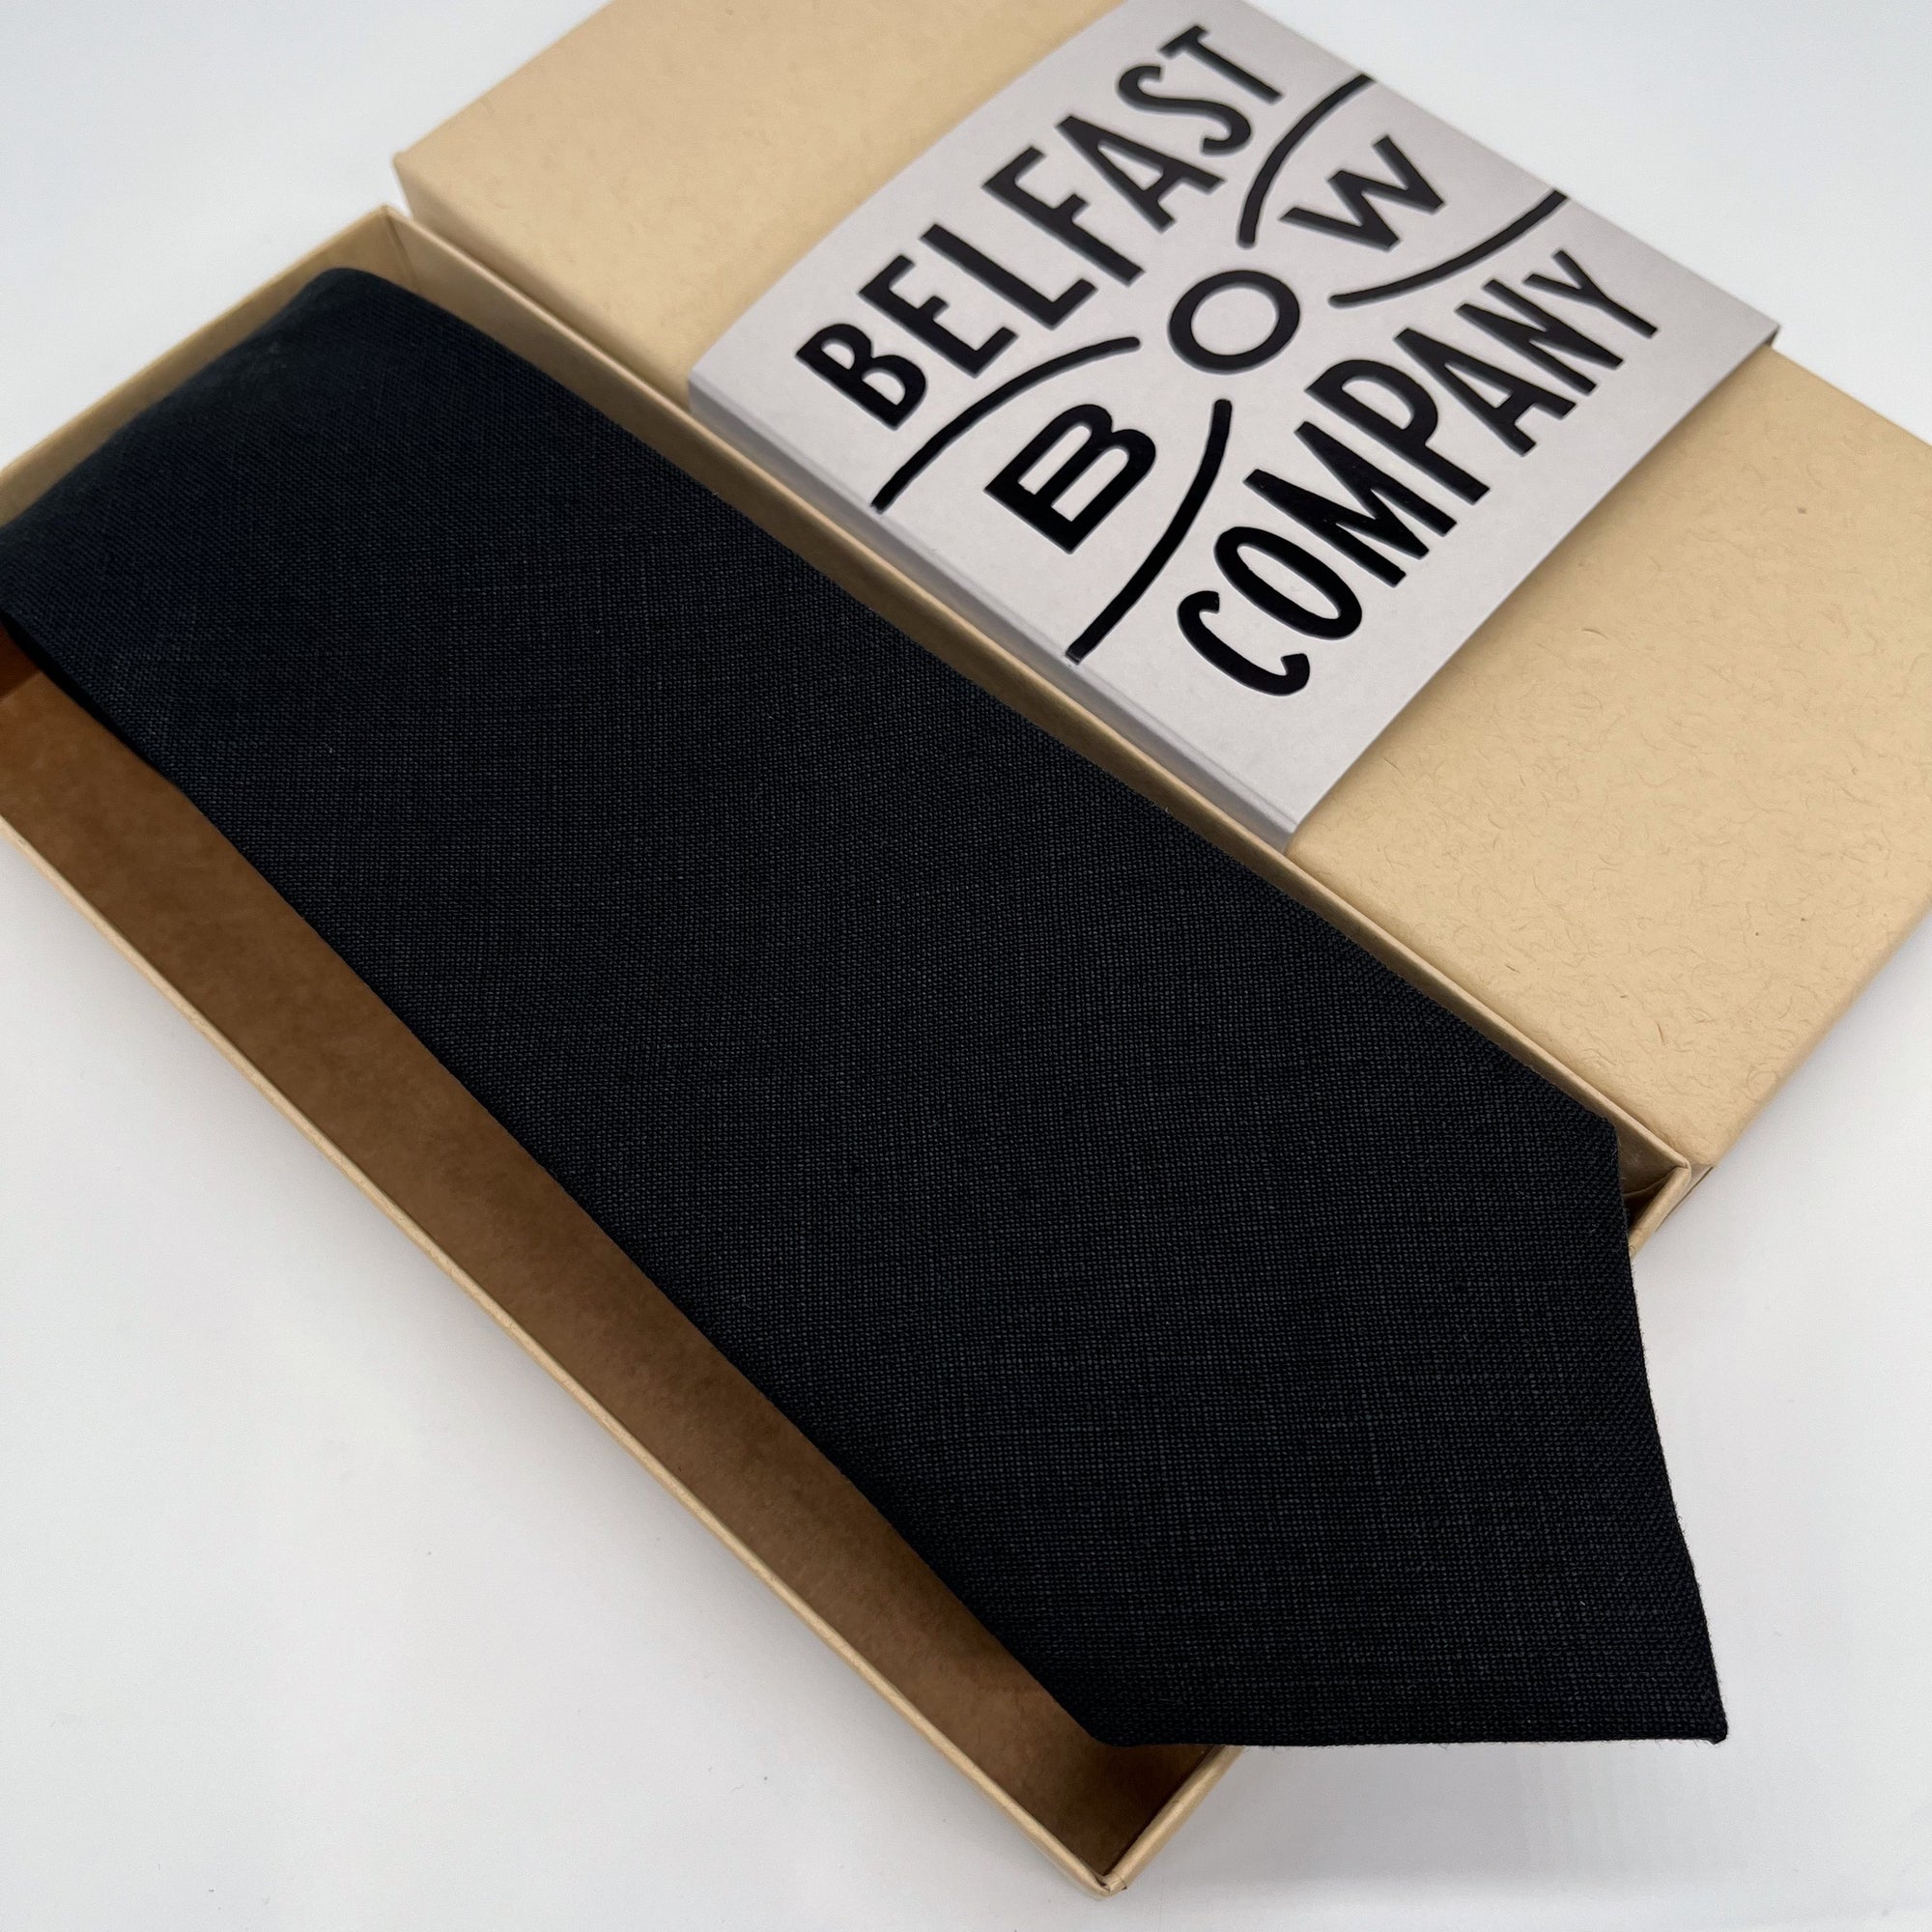 Black Tie in Irish Linen by the Belfast Bow Company